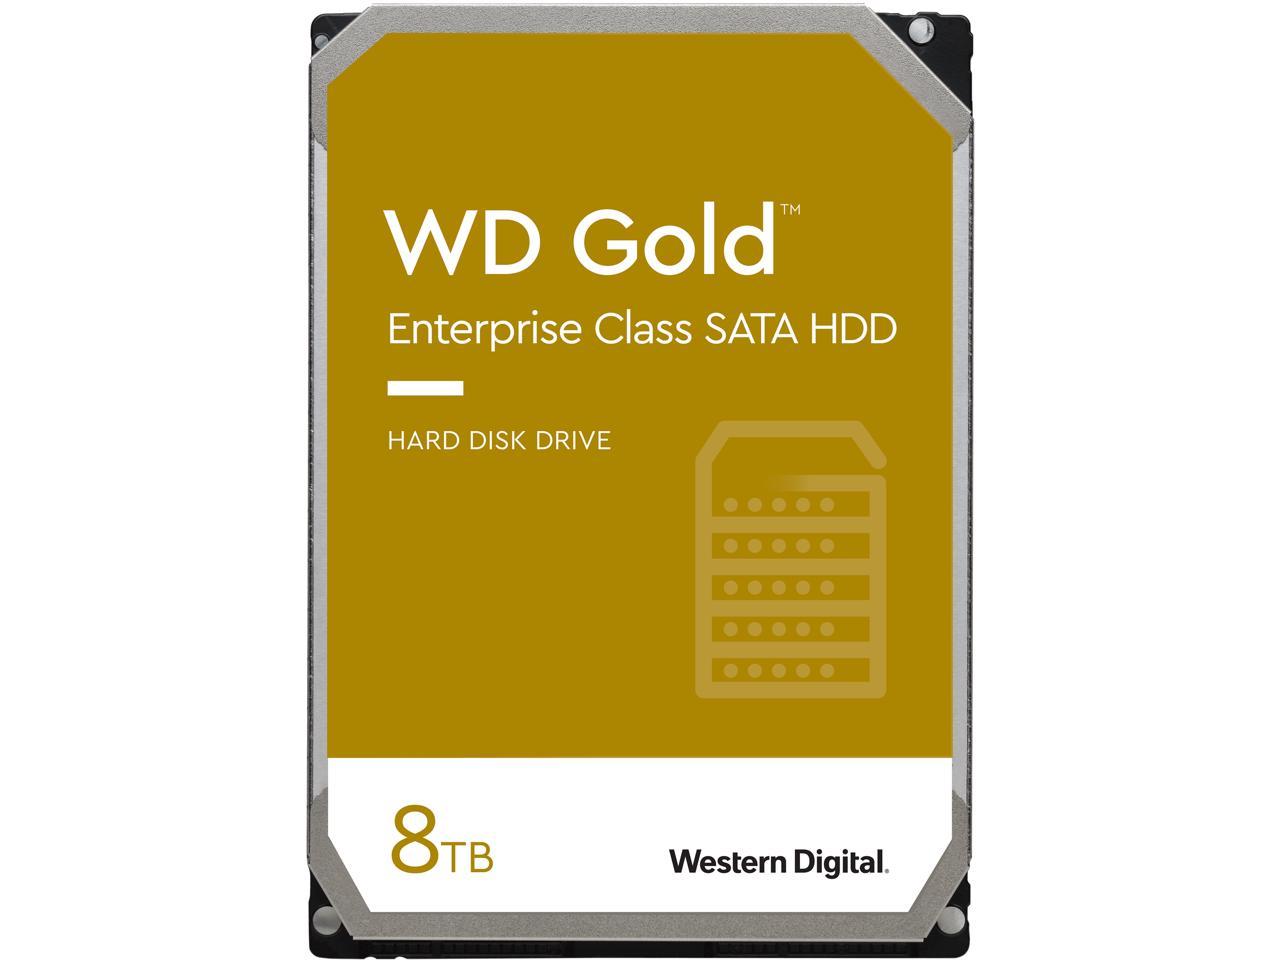 Wd Gold 8Tb Enterprise Class Hard Disk Drive - 7200 Rpm Class Sata 6Gb/S 256Mb Cache 3.5 Inch - Wd8004Fryz